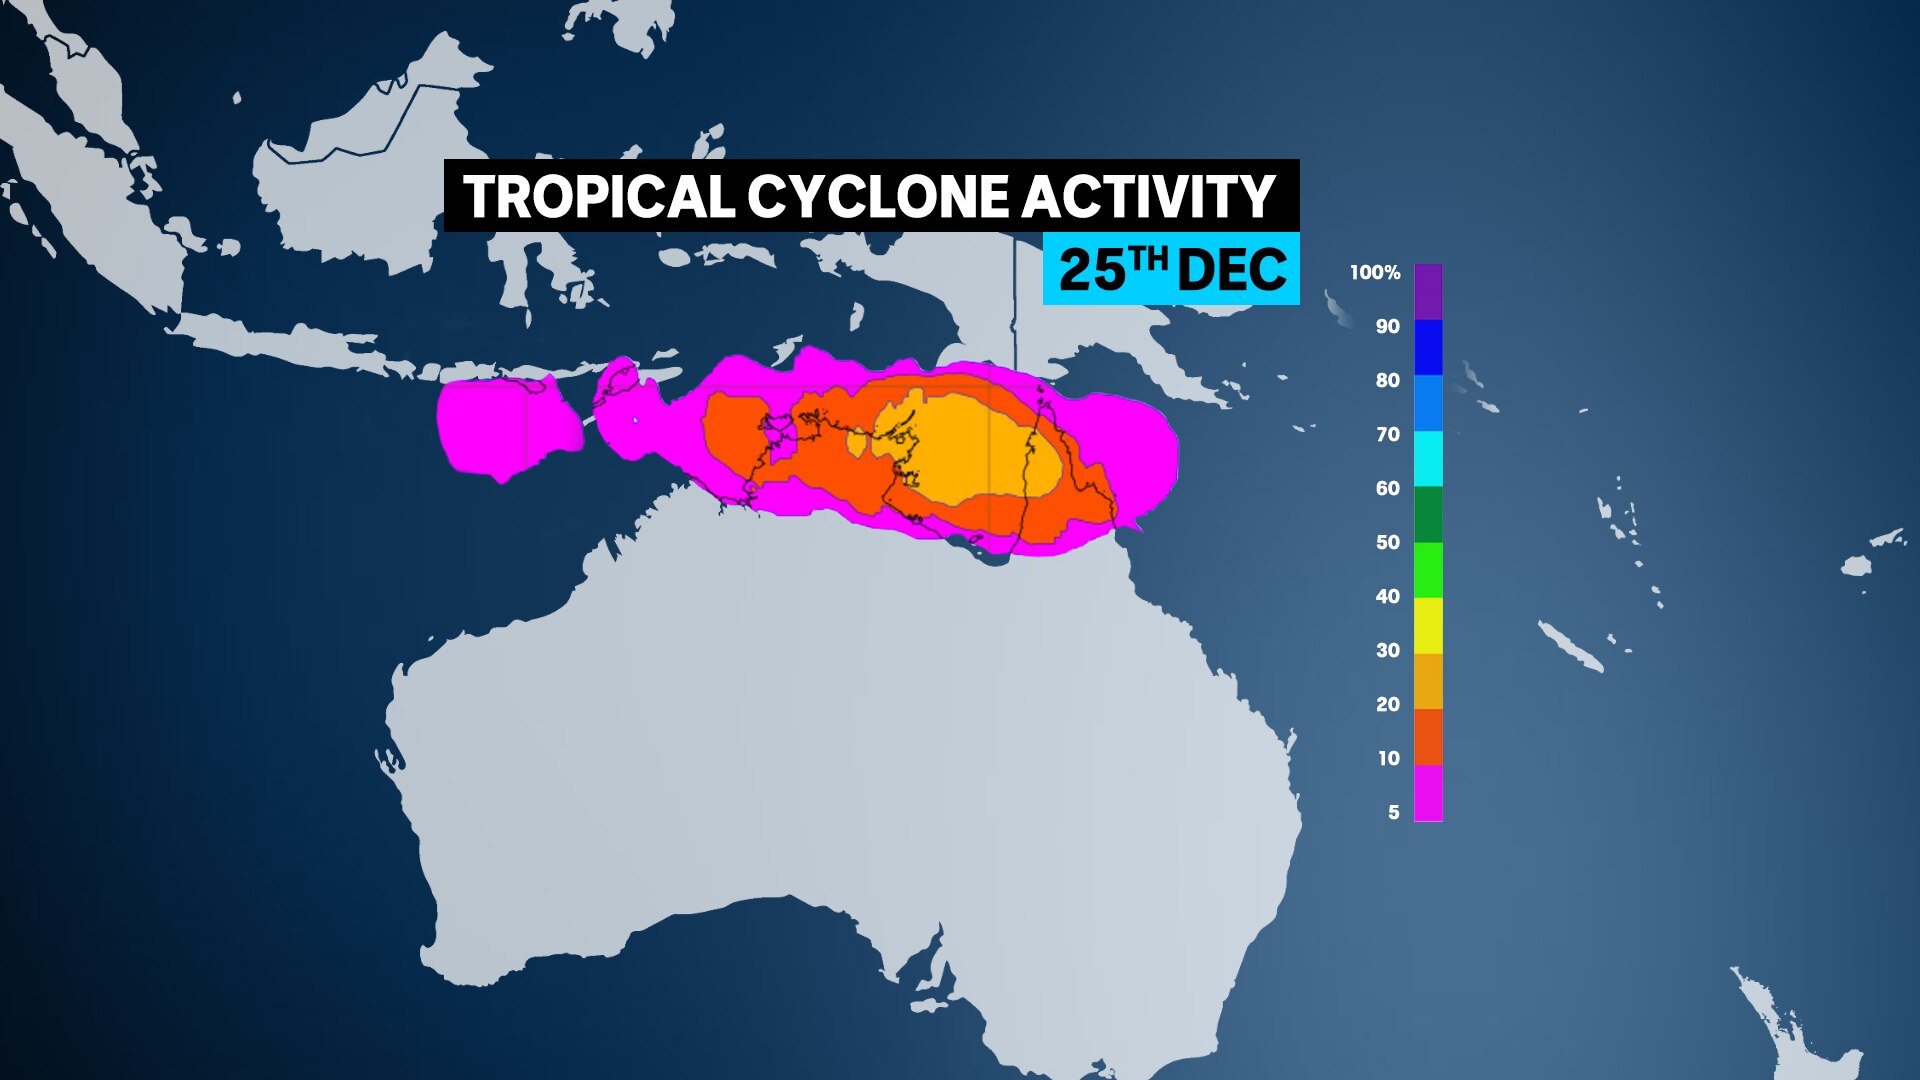 Tropical cyclone activity